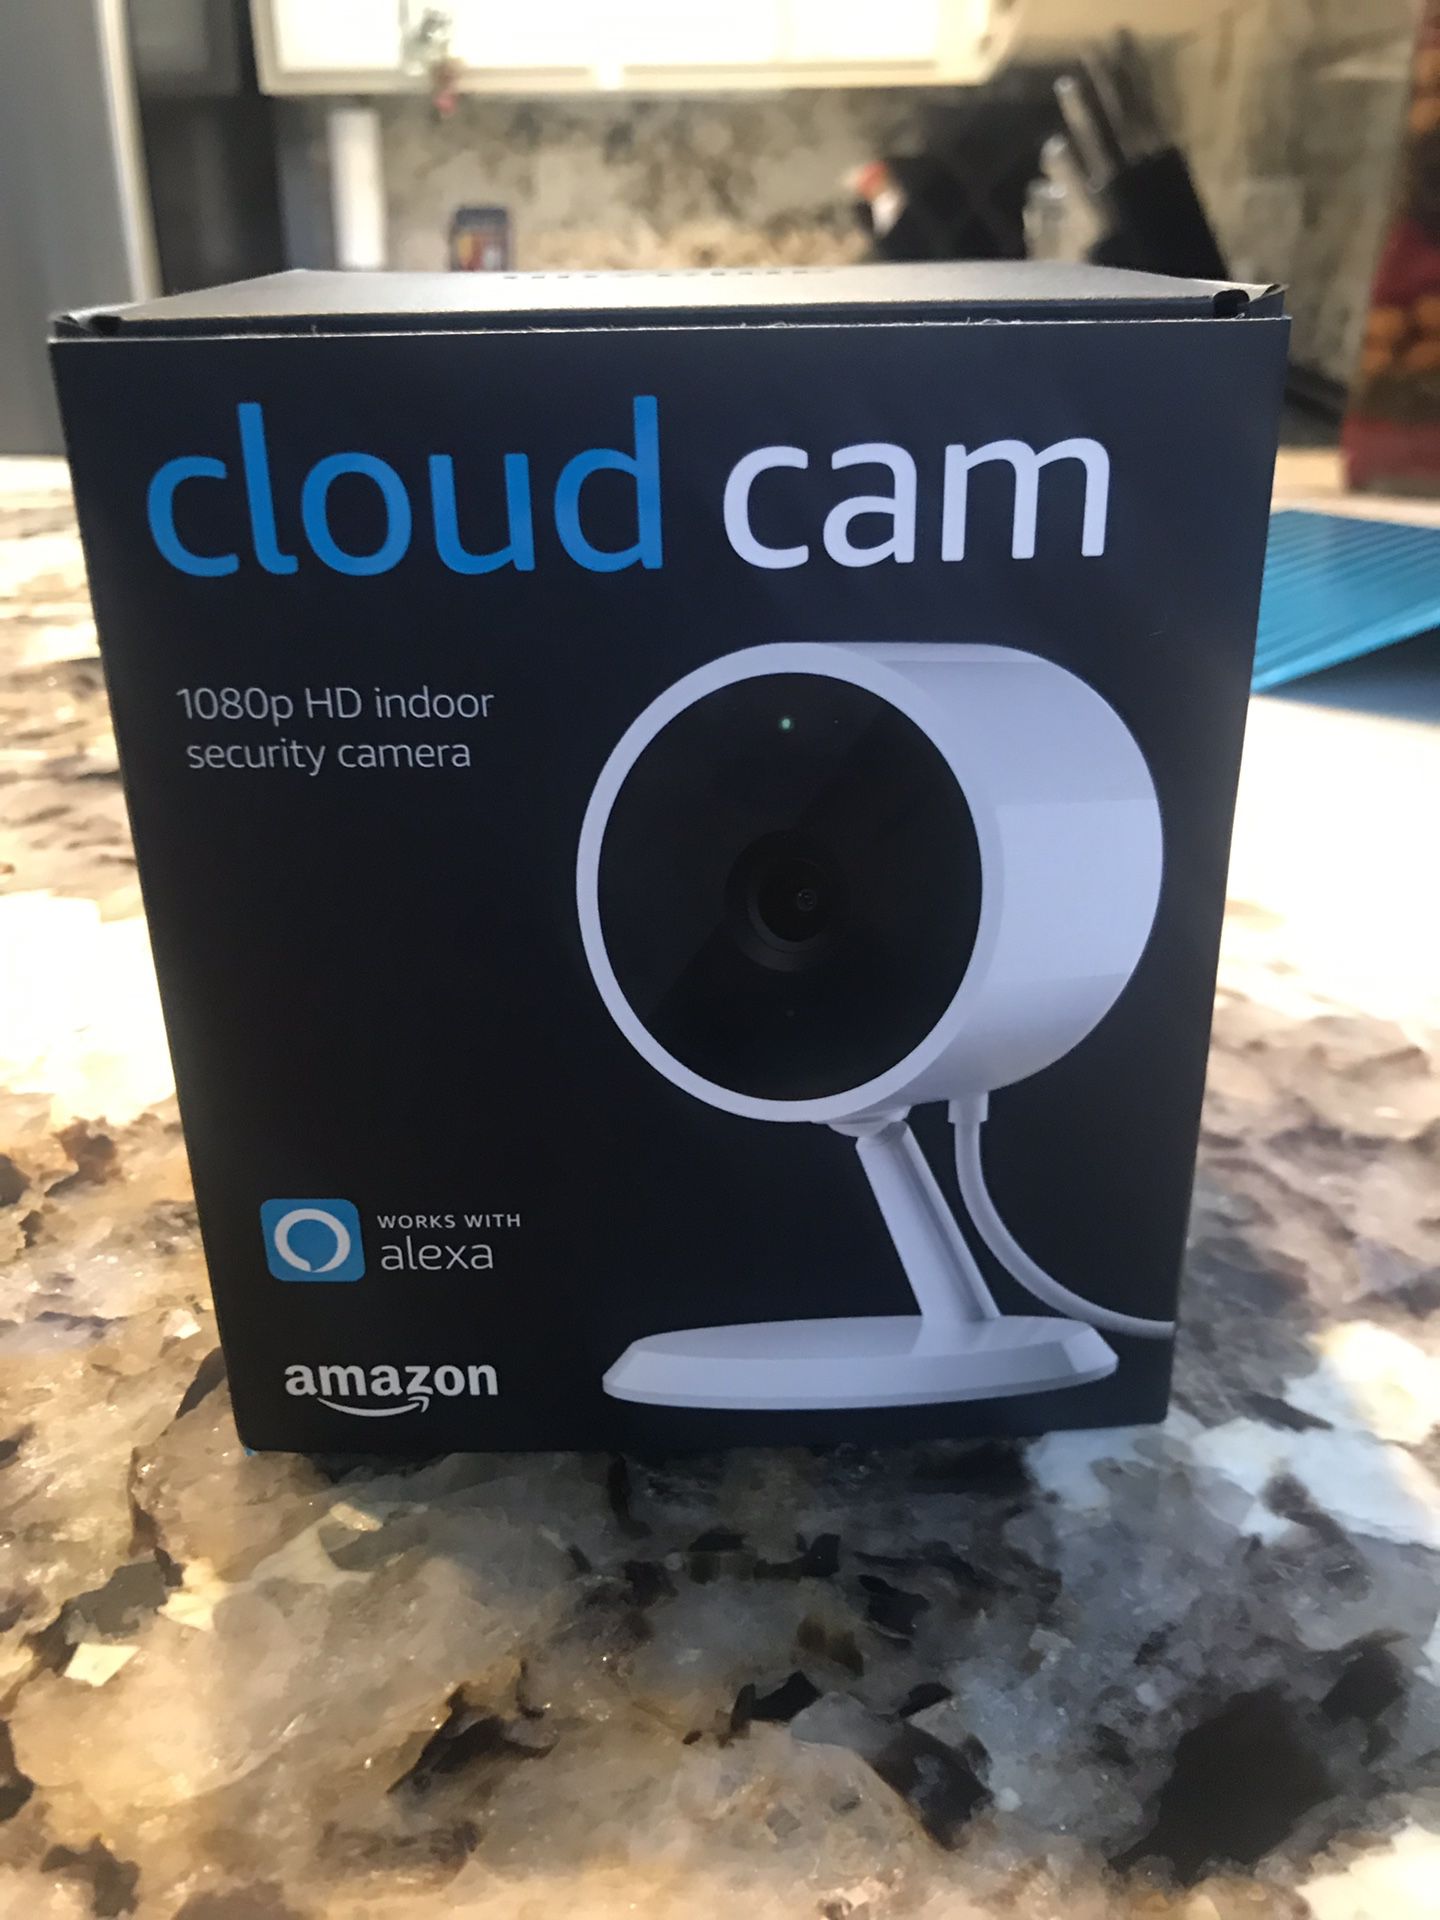 Brand new cloud cam